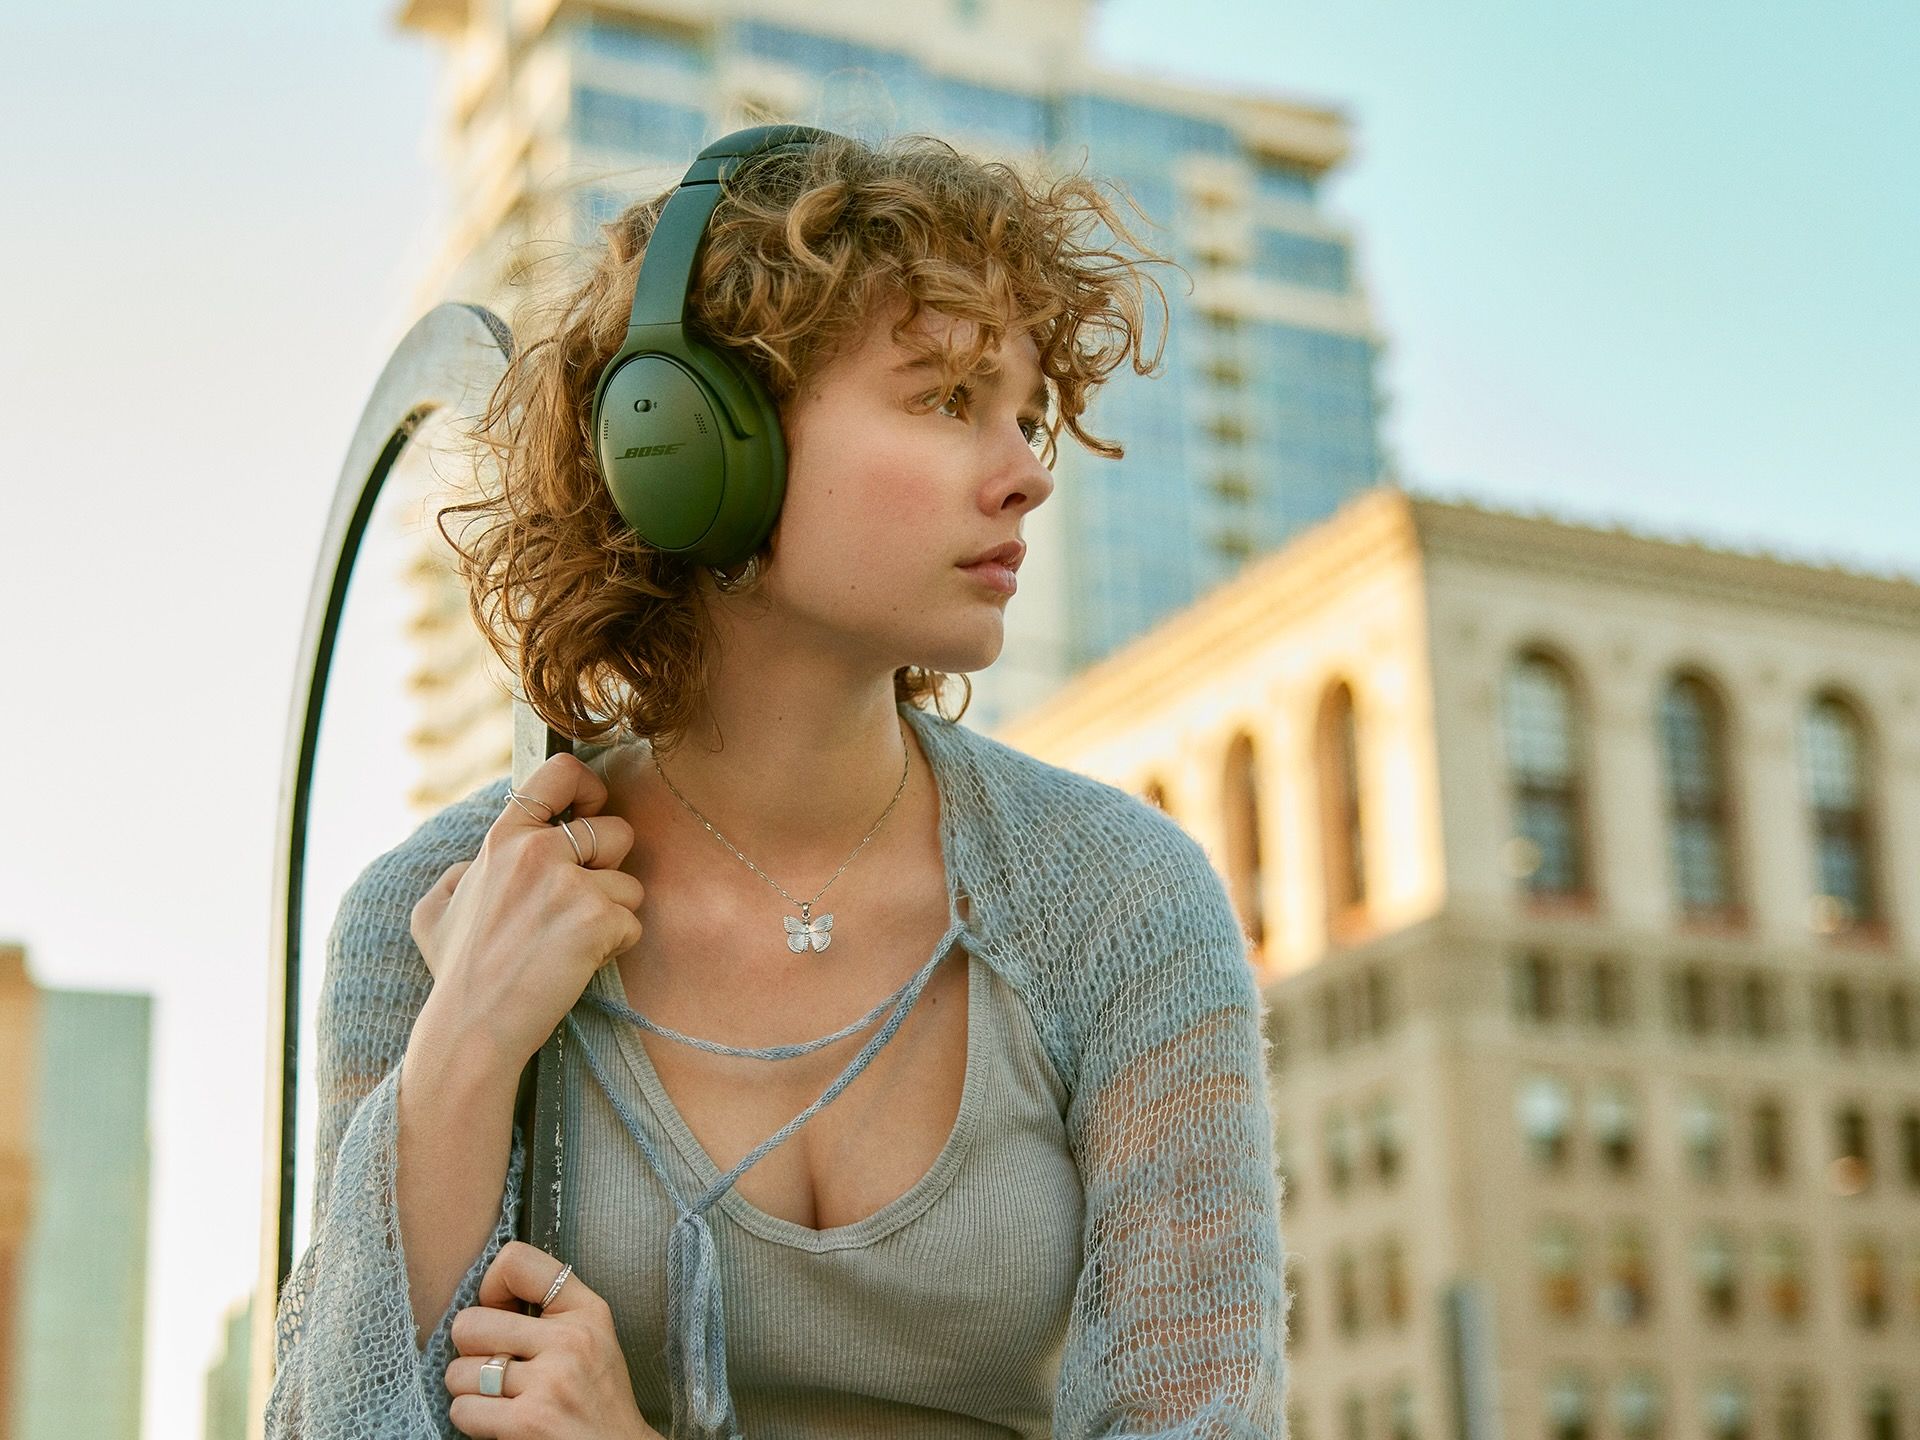 bose-quietcomfort-headphones-green-lifestyle